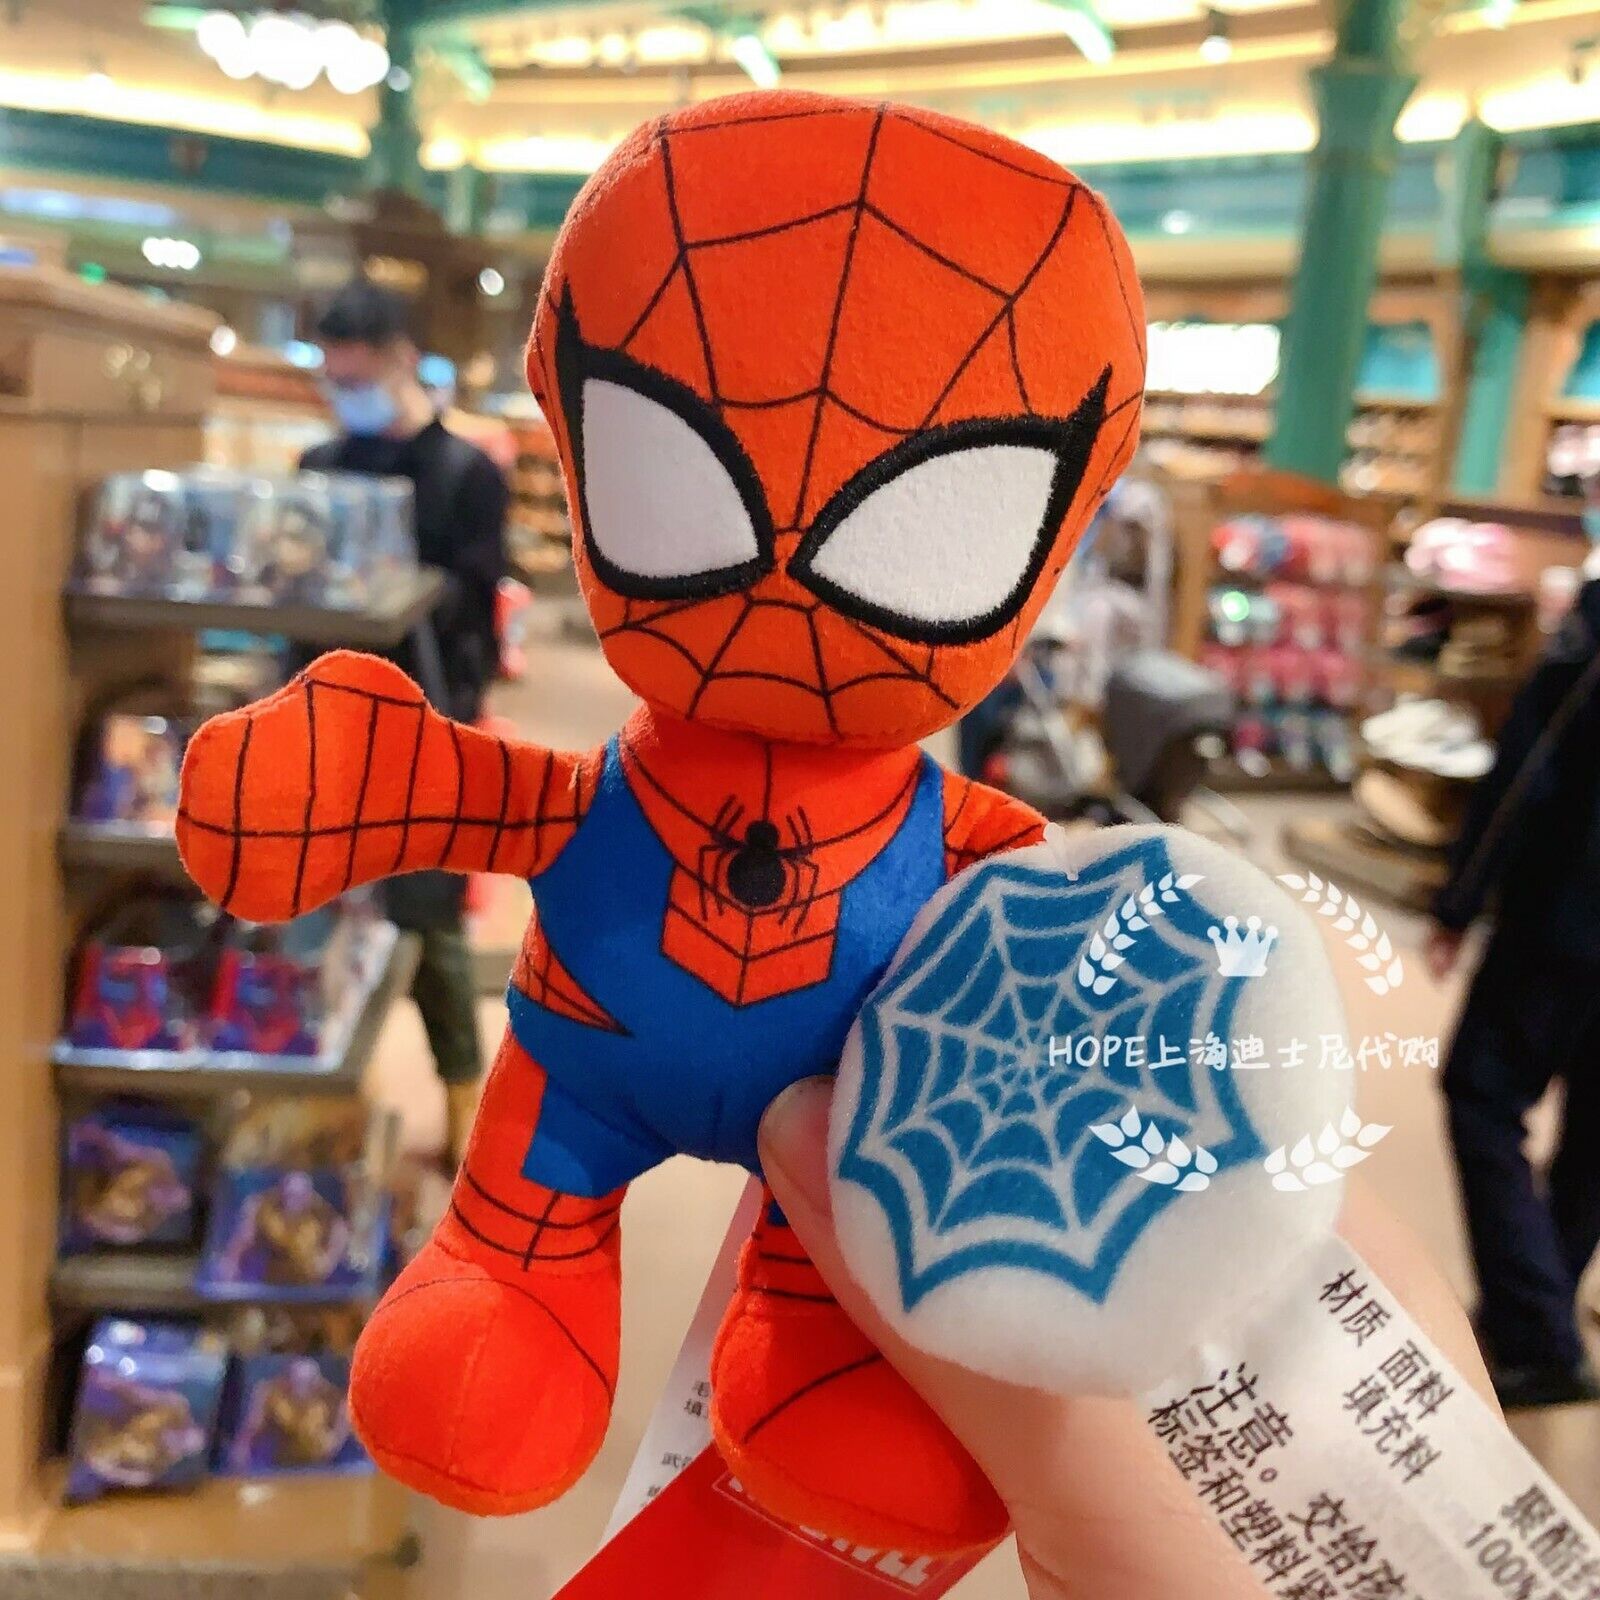 Authentic shanghai disney store nuiMOs Plush Toy Marvel Spider Man Doll